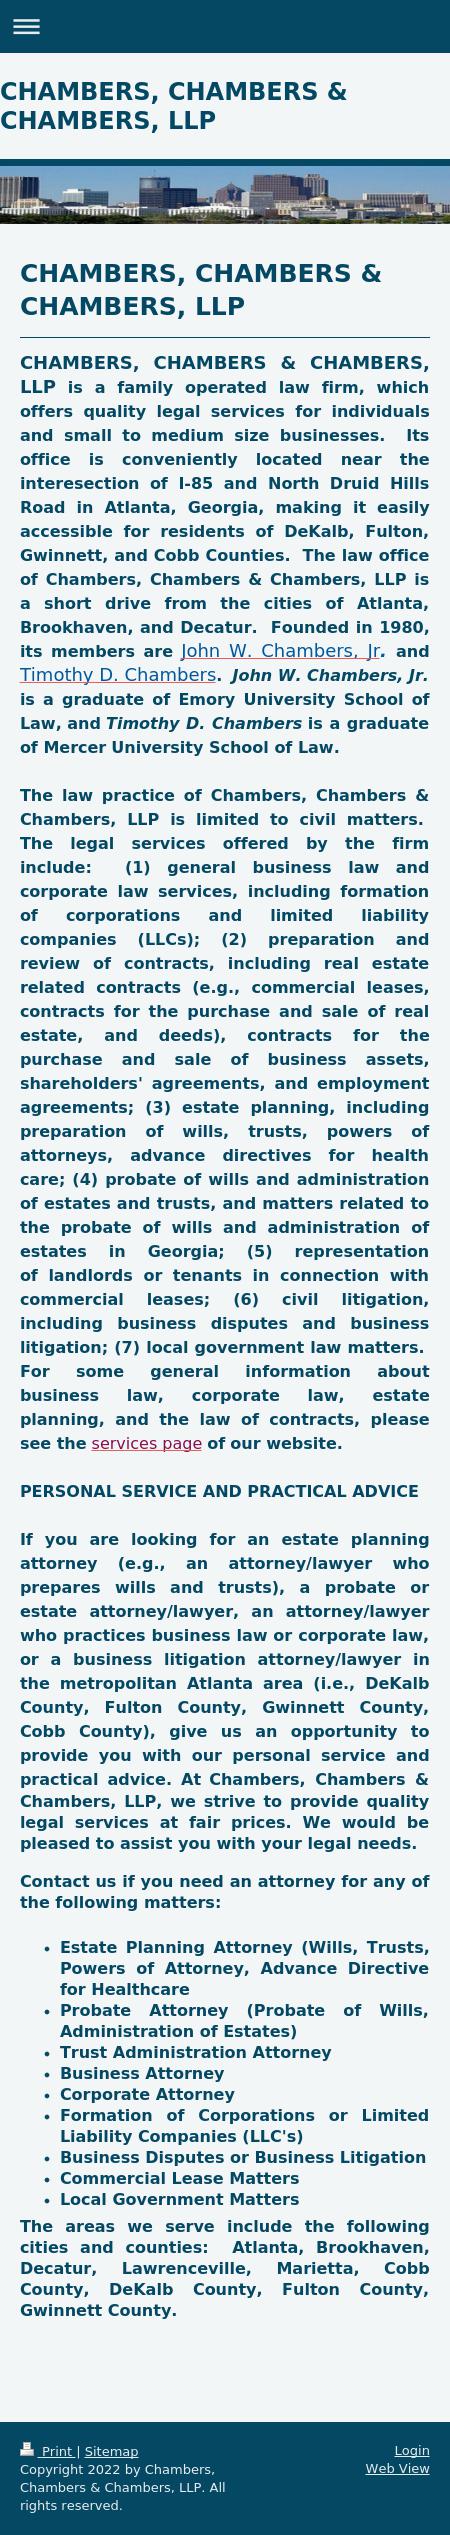 Chambers Chambers & Chambers LLP - Atlanta GA Lawyers